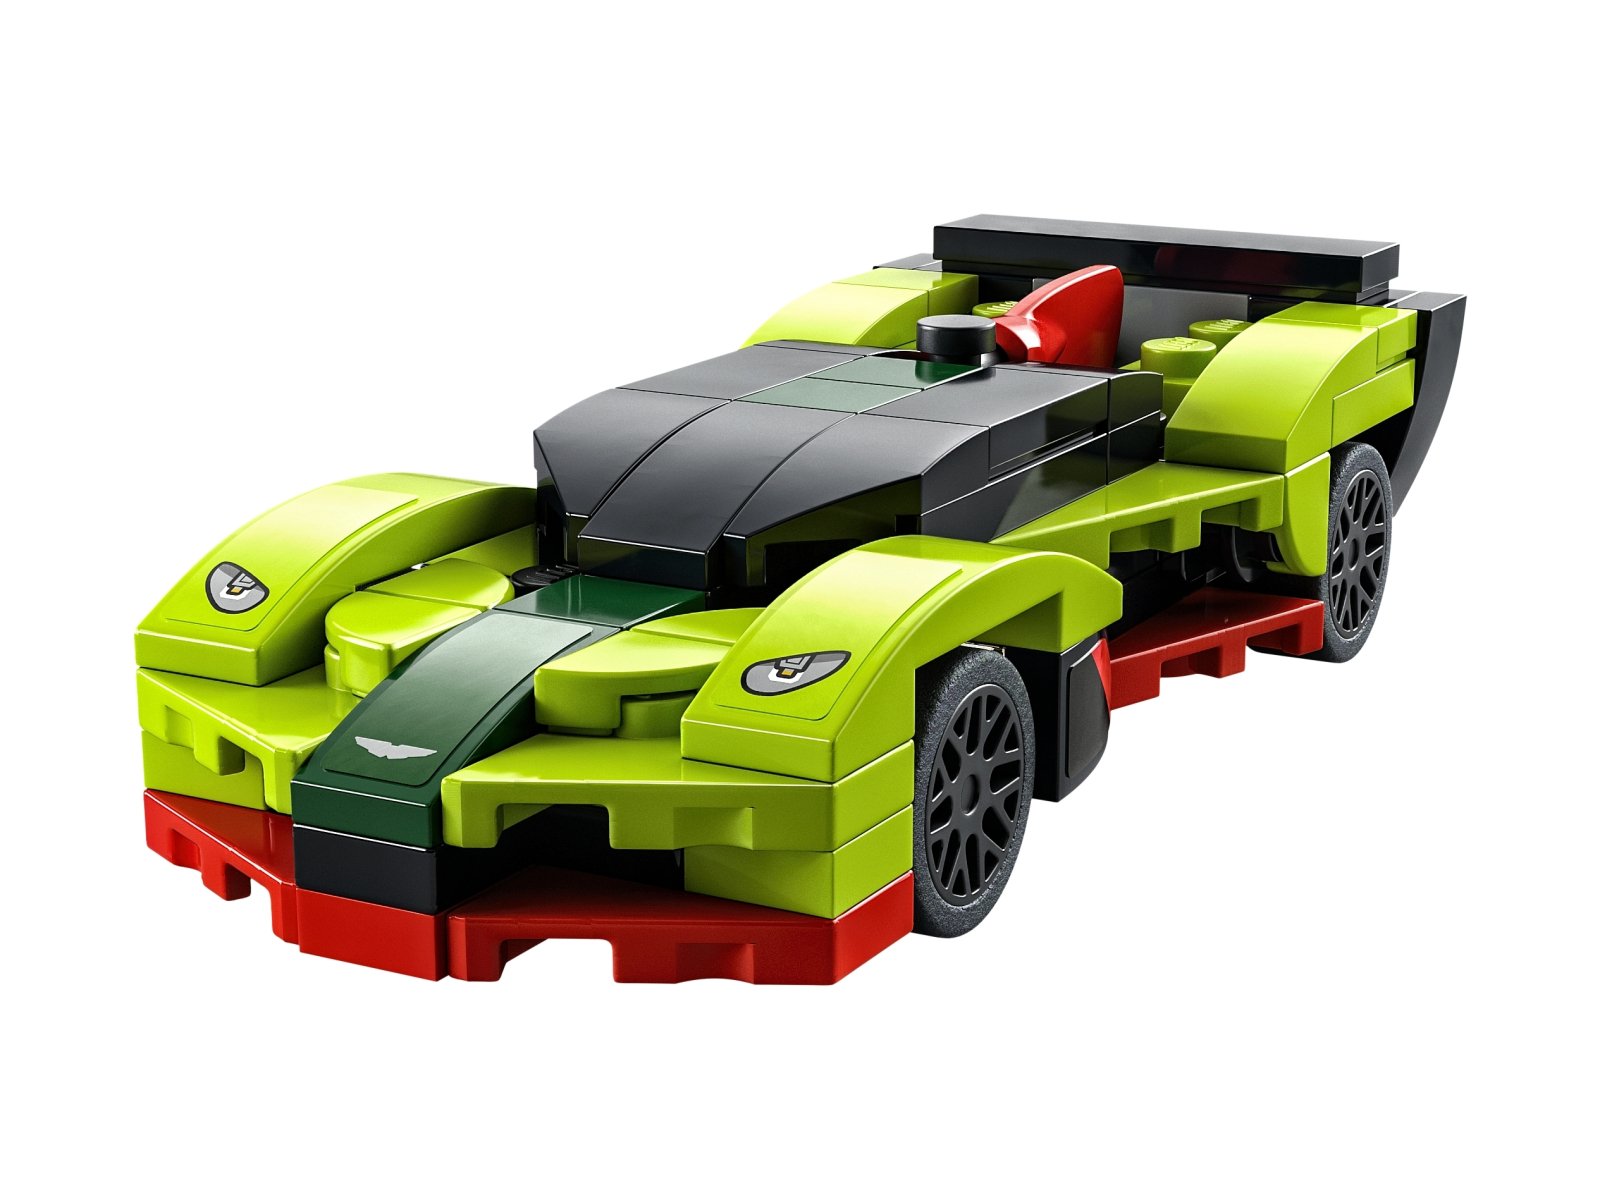 LEGO 30434 Aston Martin Valkyrie AMR Pro